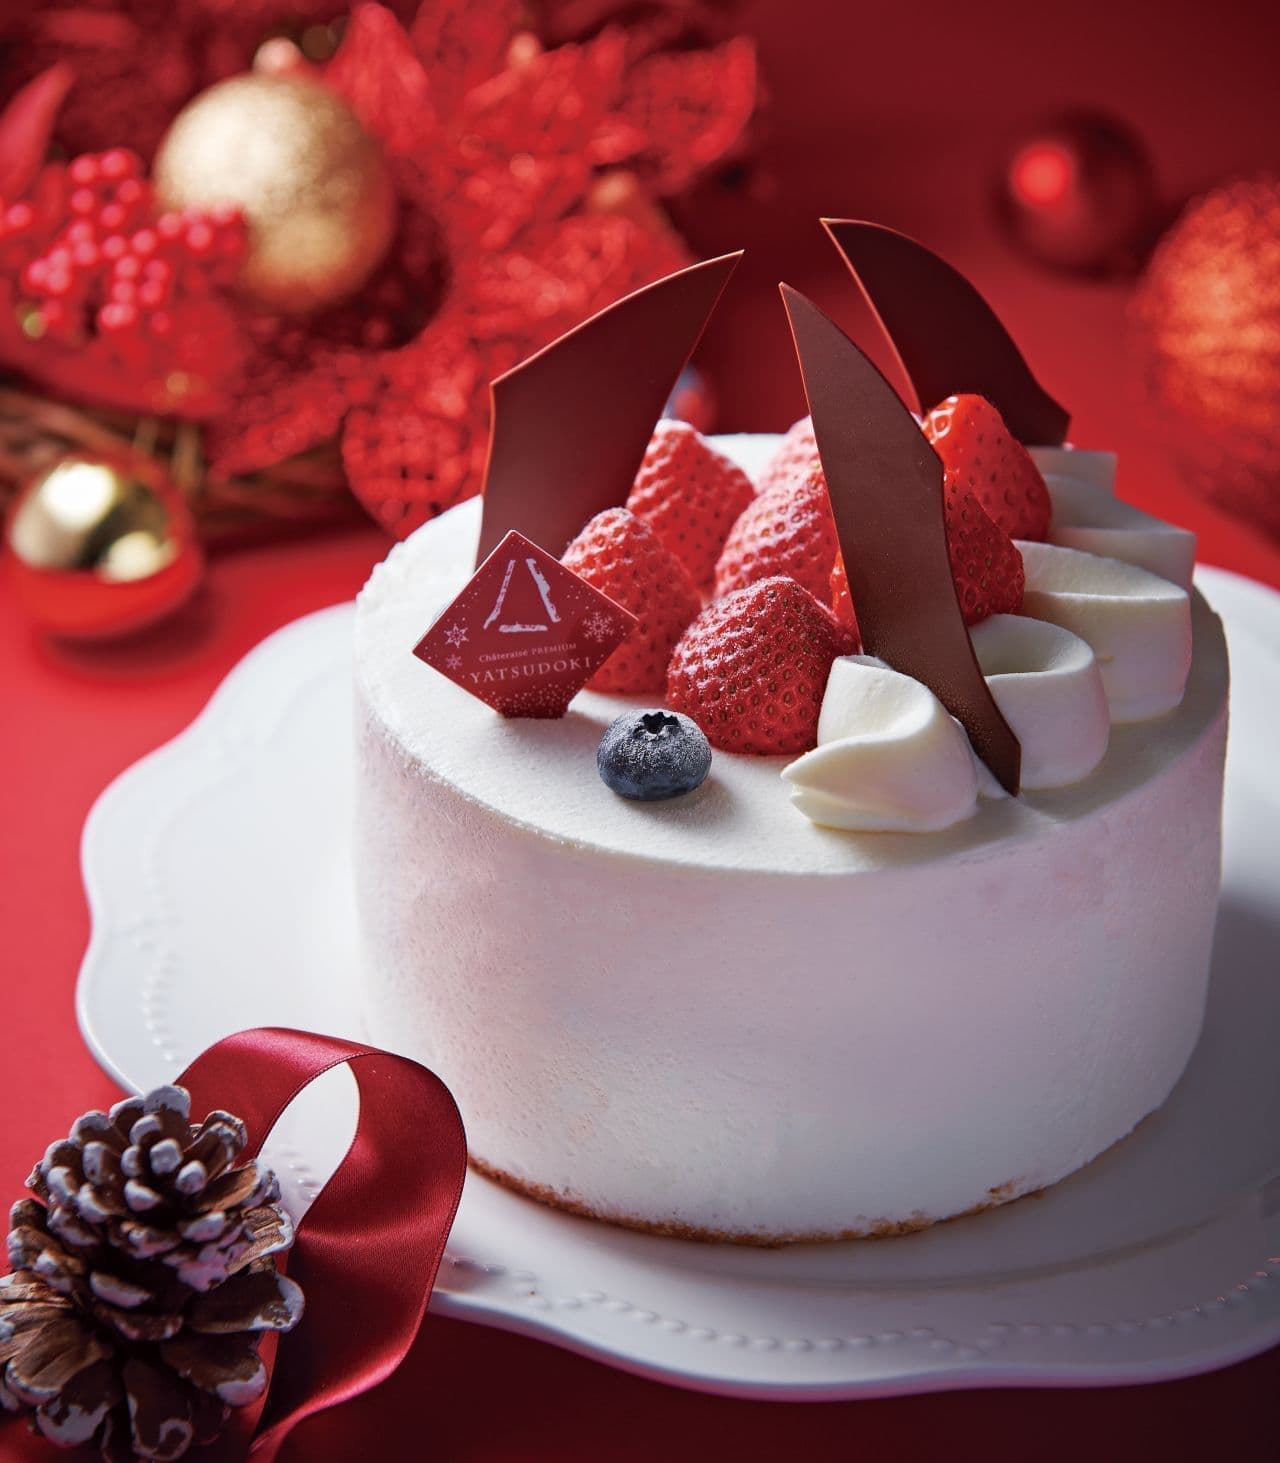 Yatsudoki Christmas Cake 2022 "Noel Strawberry Decoration